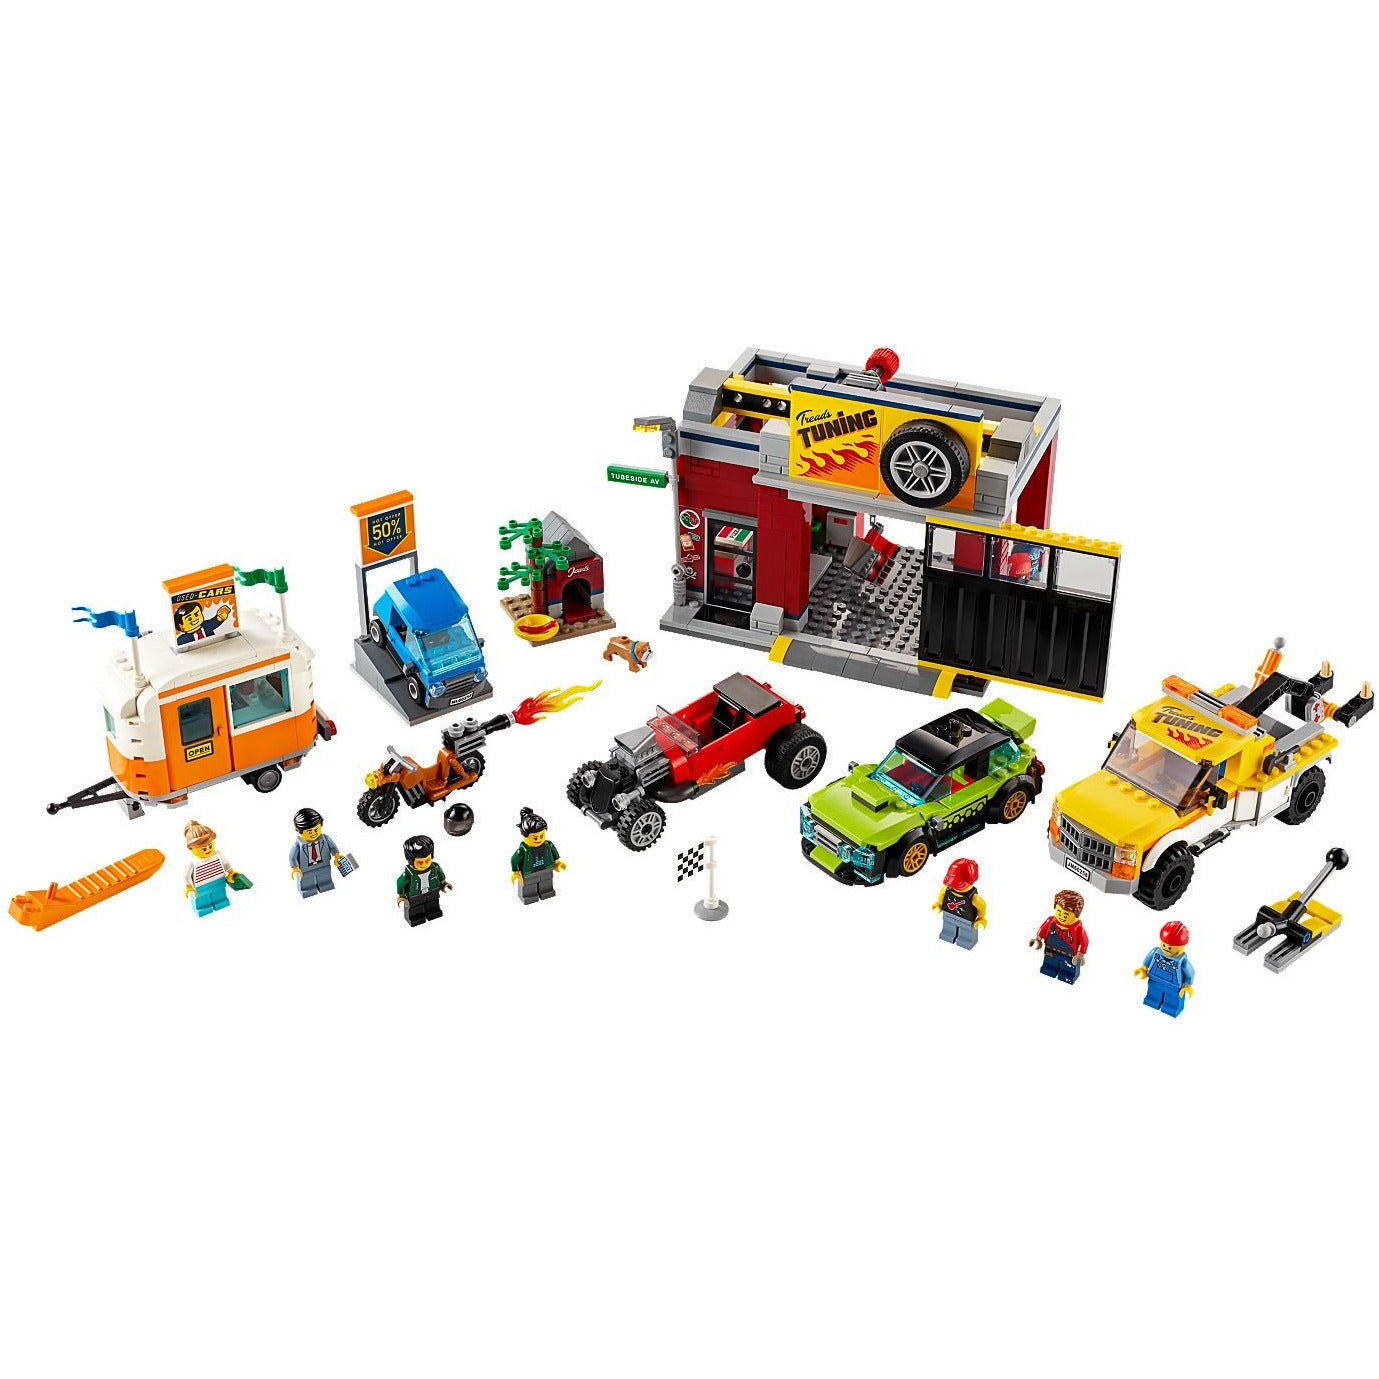 Lego City: Tuning Workshop 60258